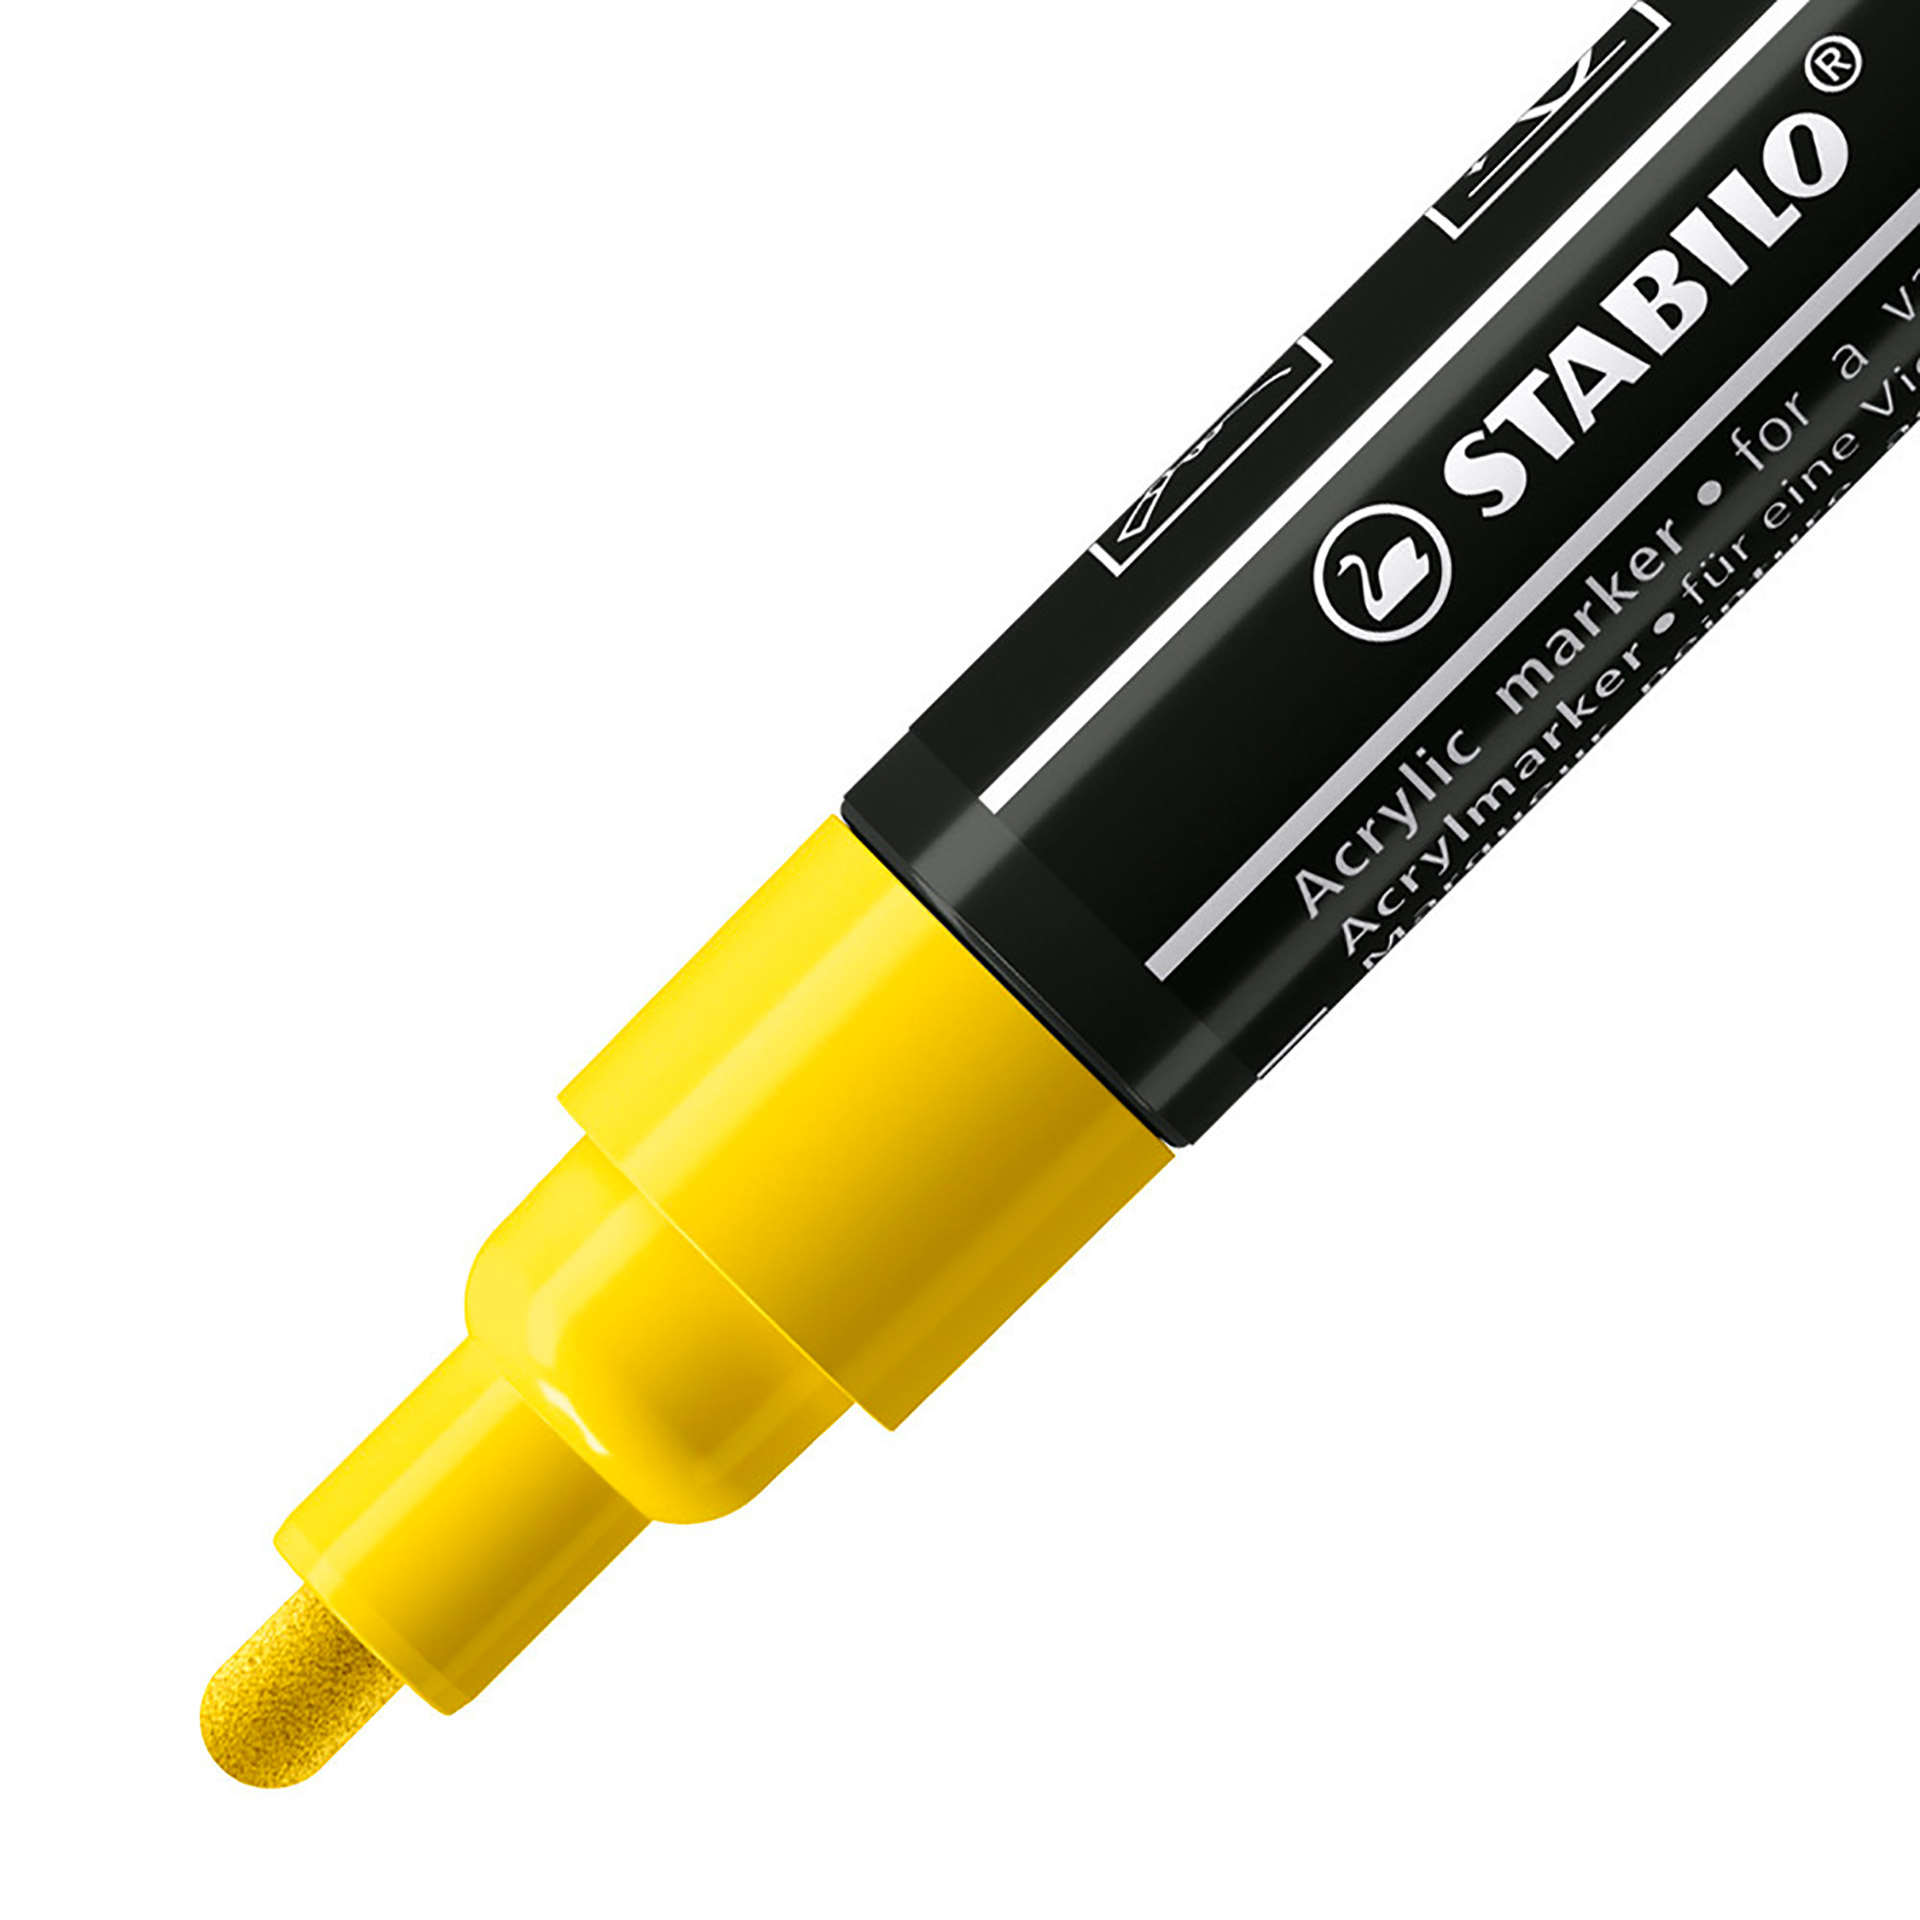 STABILO FREE Acrylic - T300 Punta rotonda 2-3mm - Vibrant Edition - Astuccio da, , large